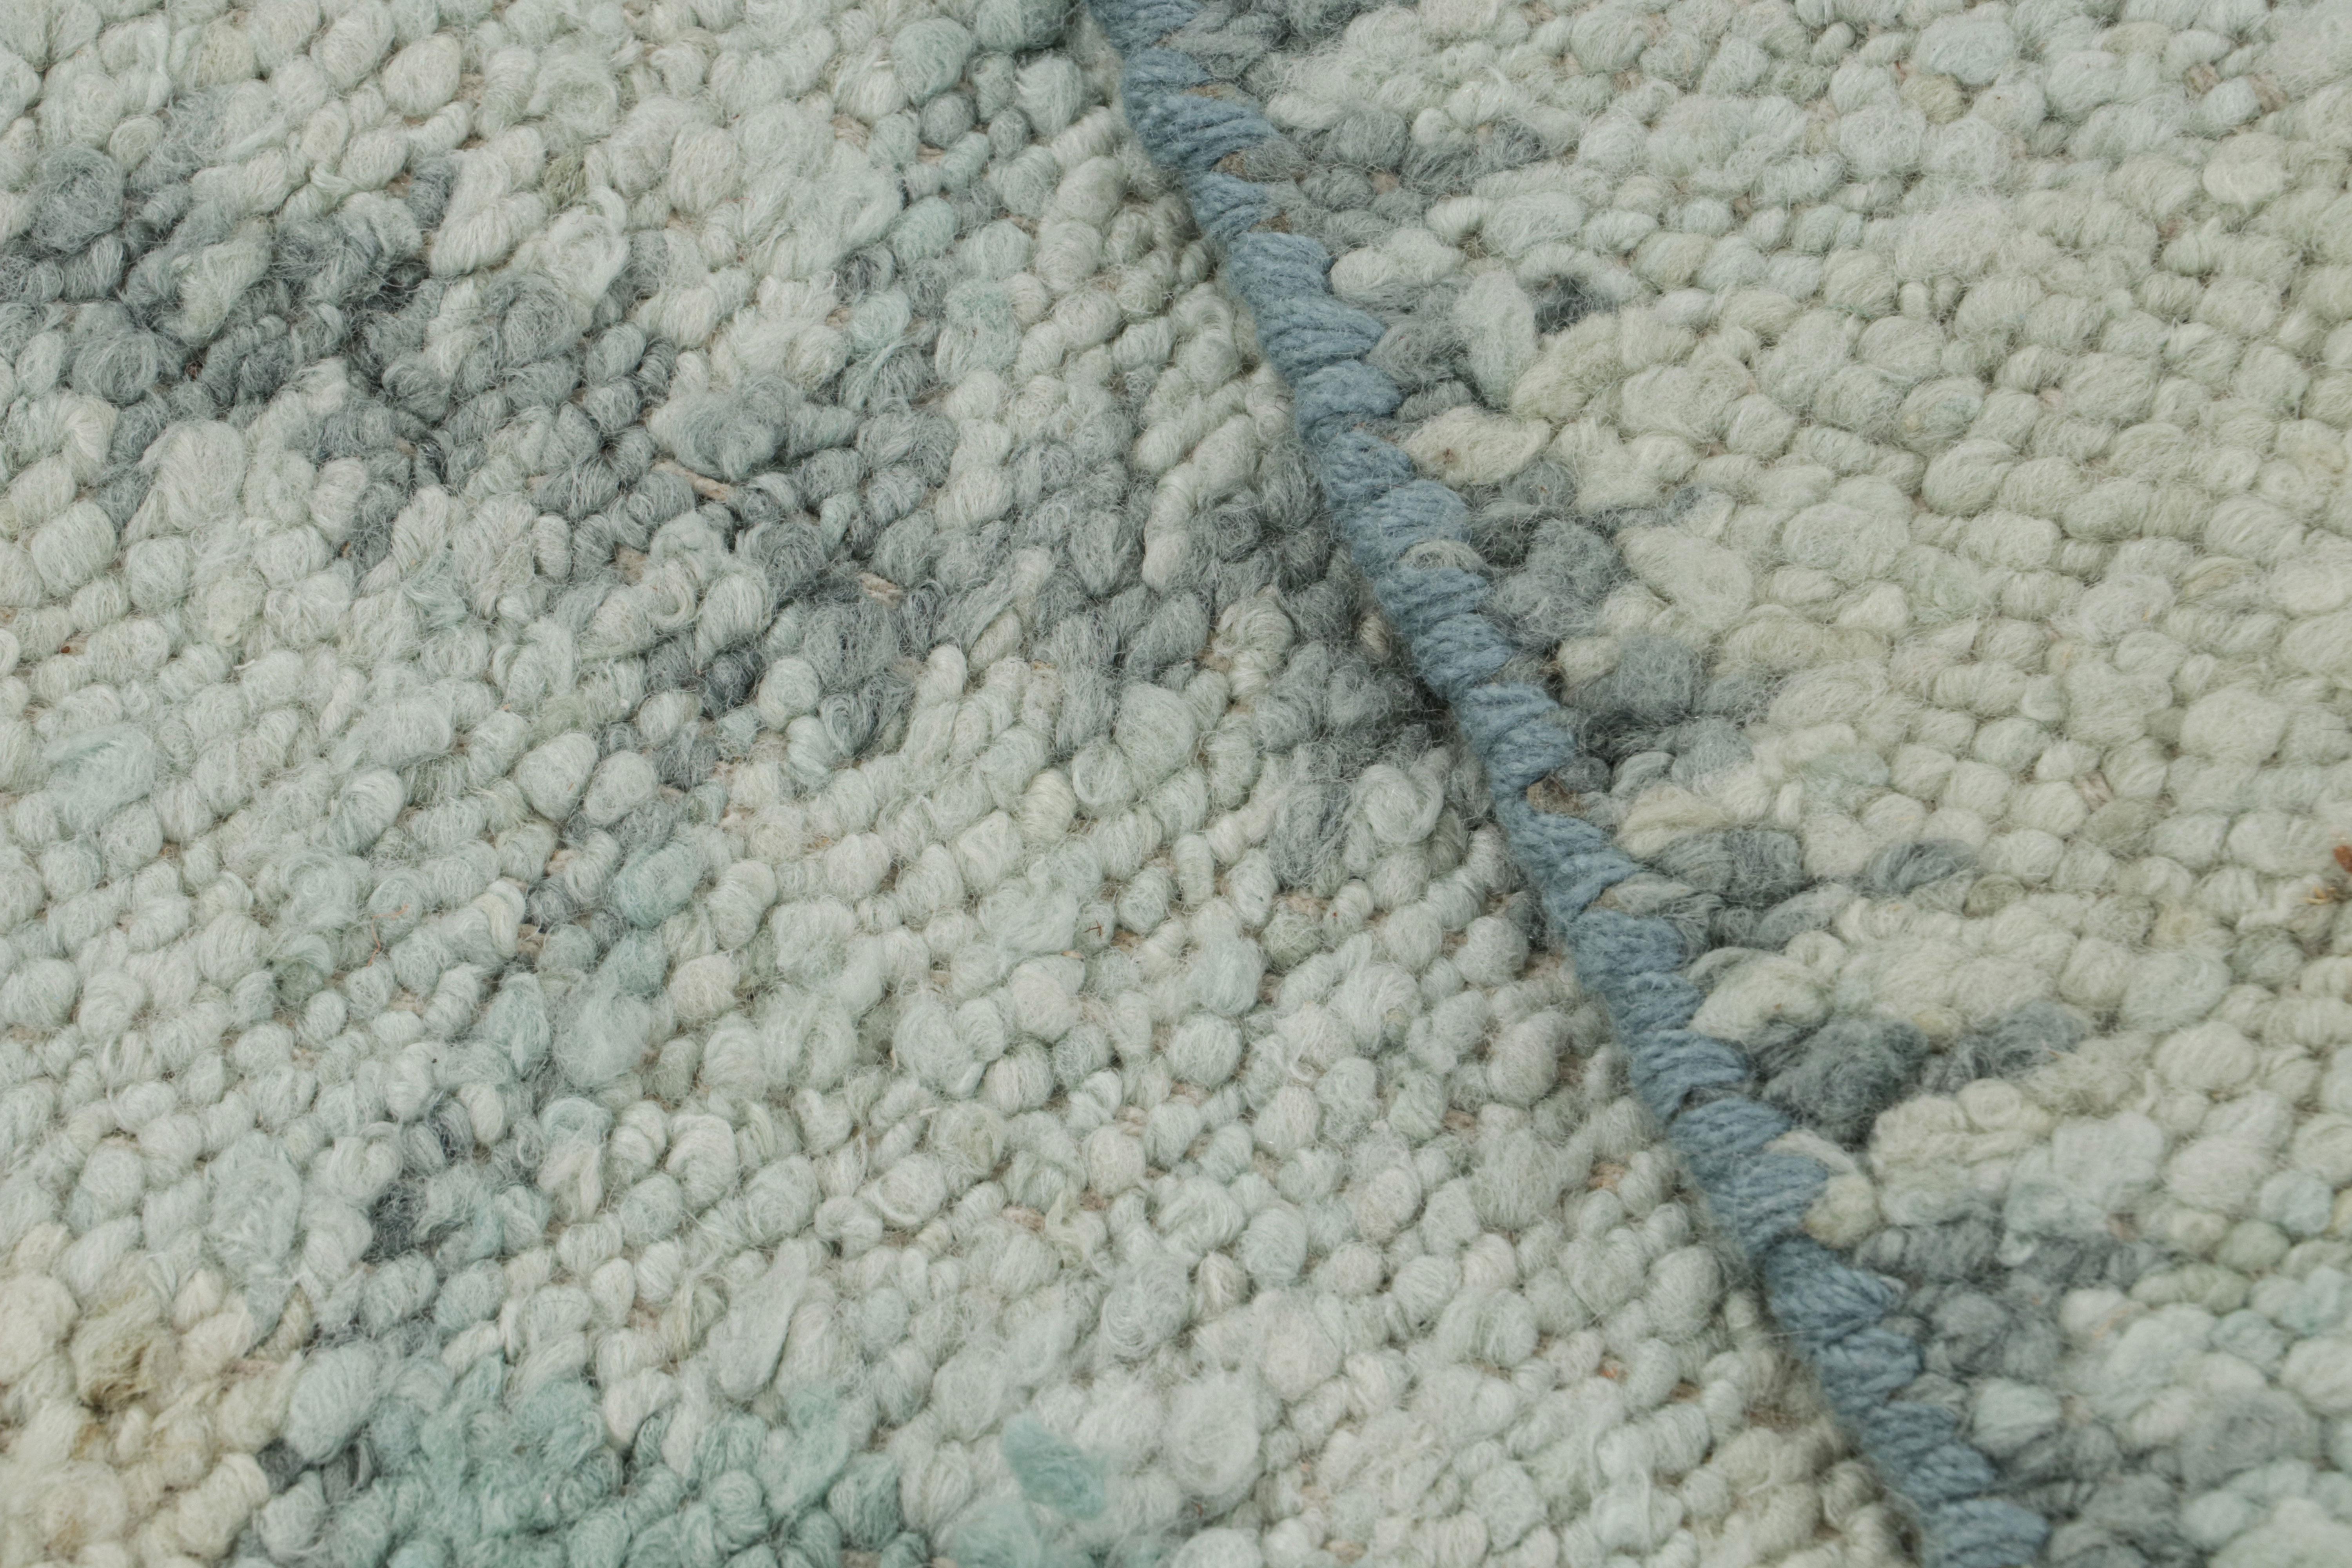 Wool Rug & Kilim’s Scandinavian Rug in Seafoam Green and Teal Blue Geometric Patterns For Sale